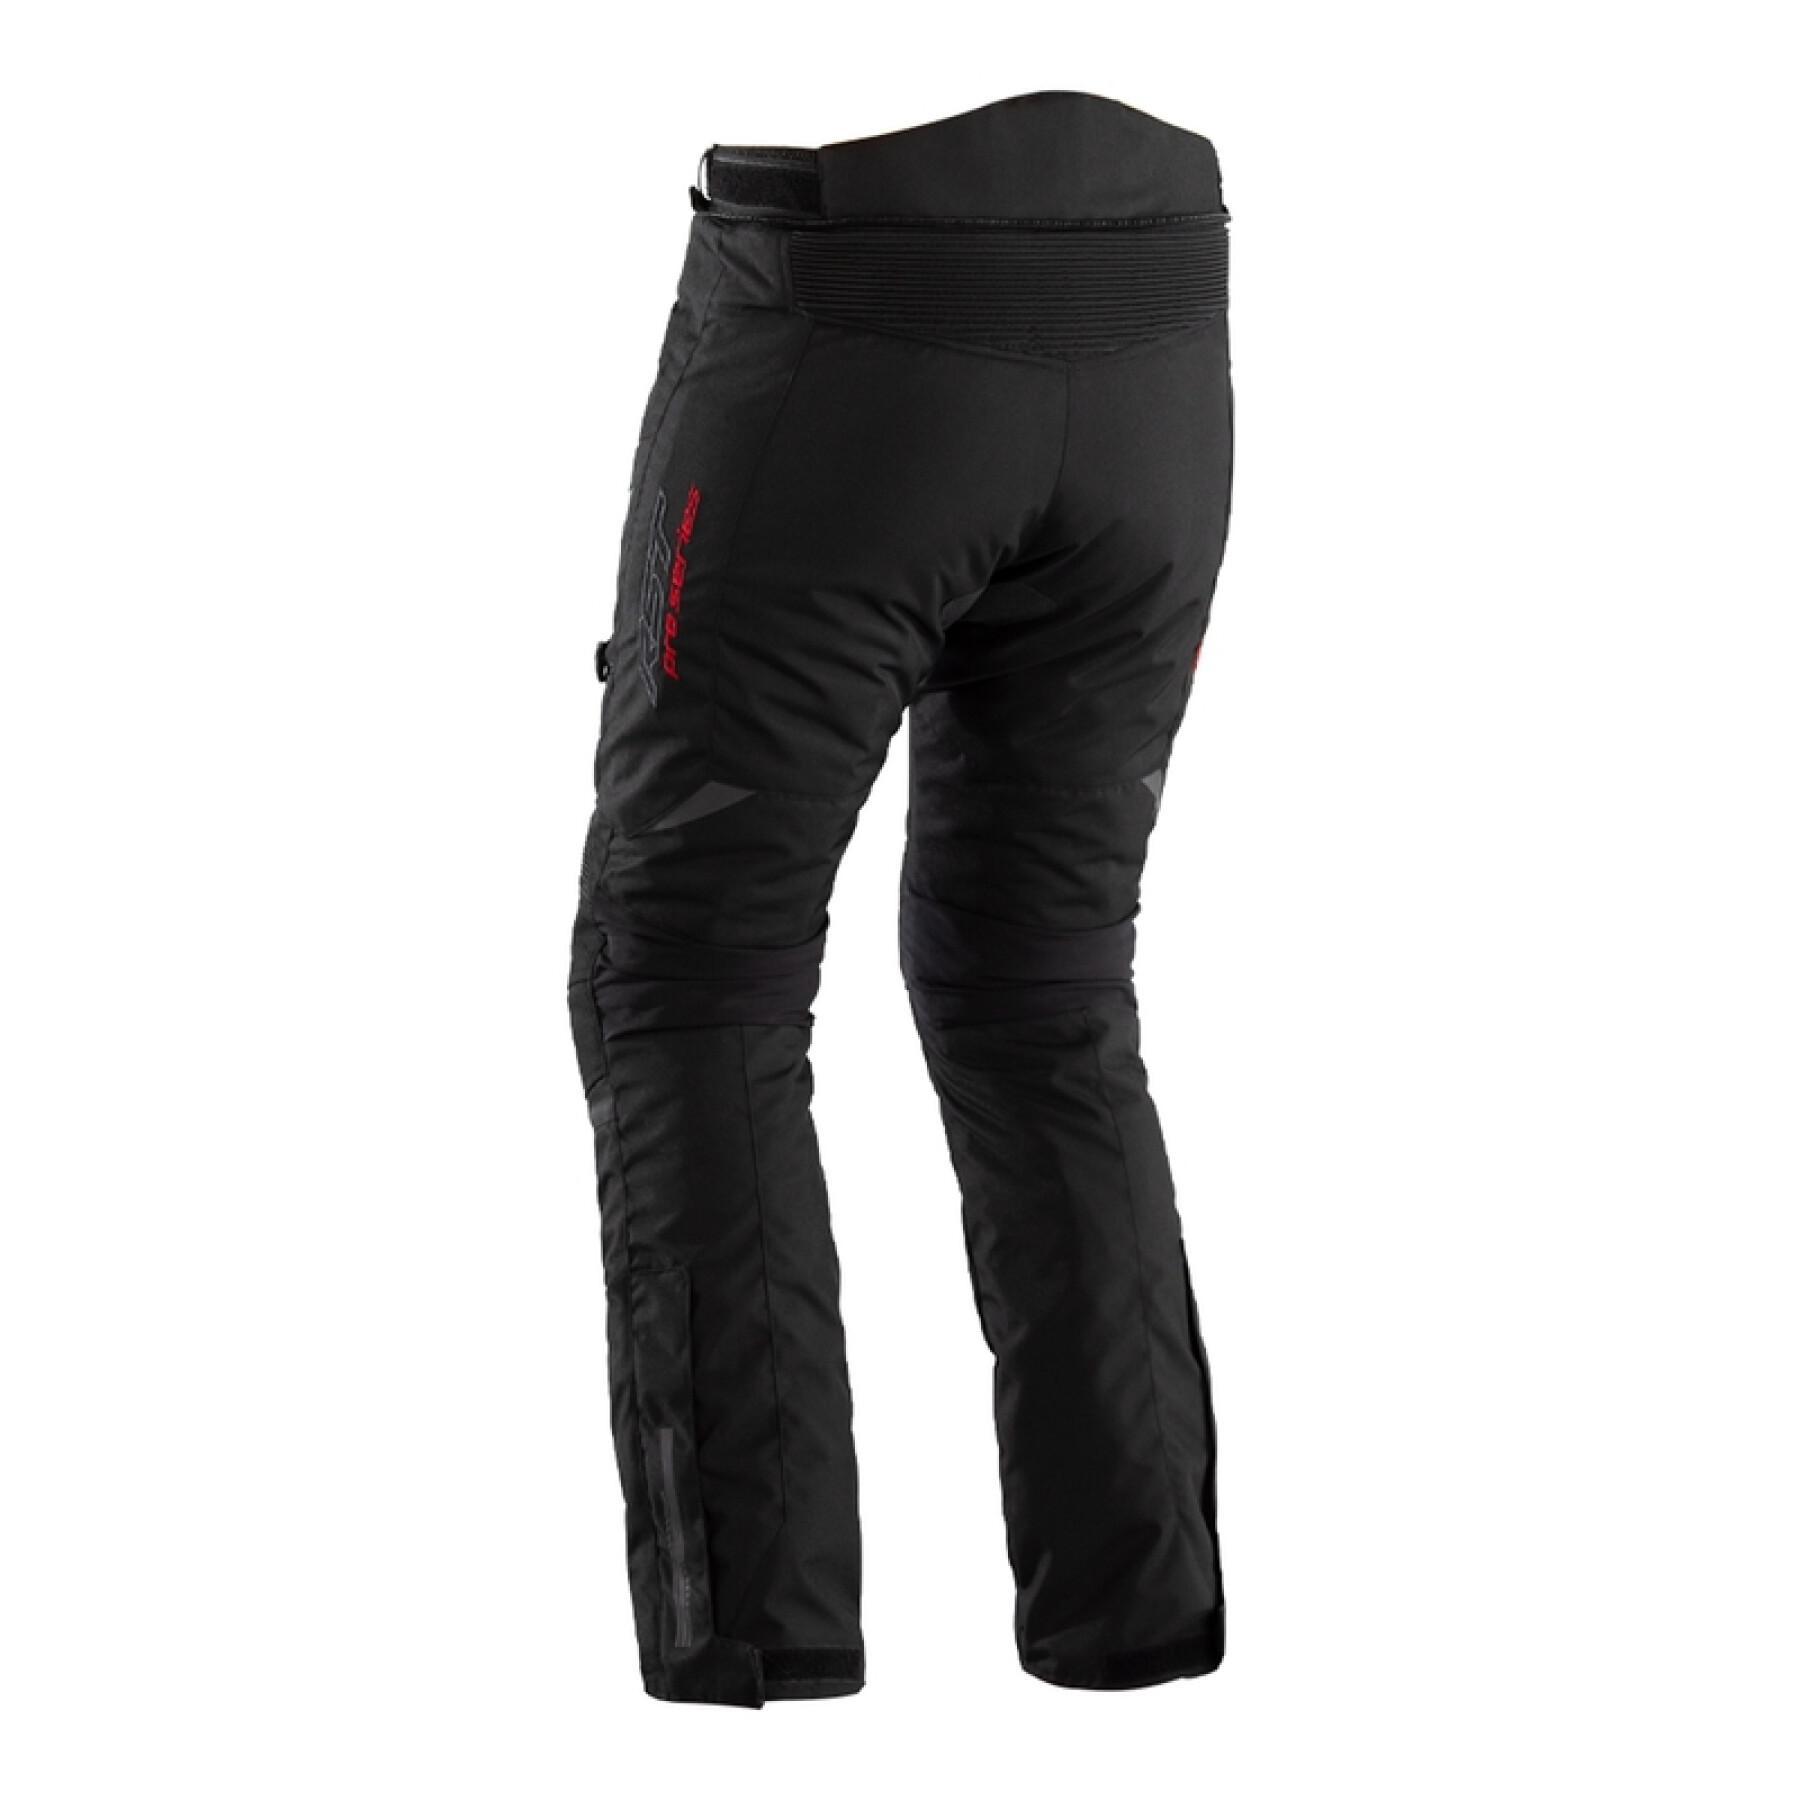 Motorcycle pants textile pro series RST Paragon 6